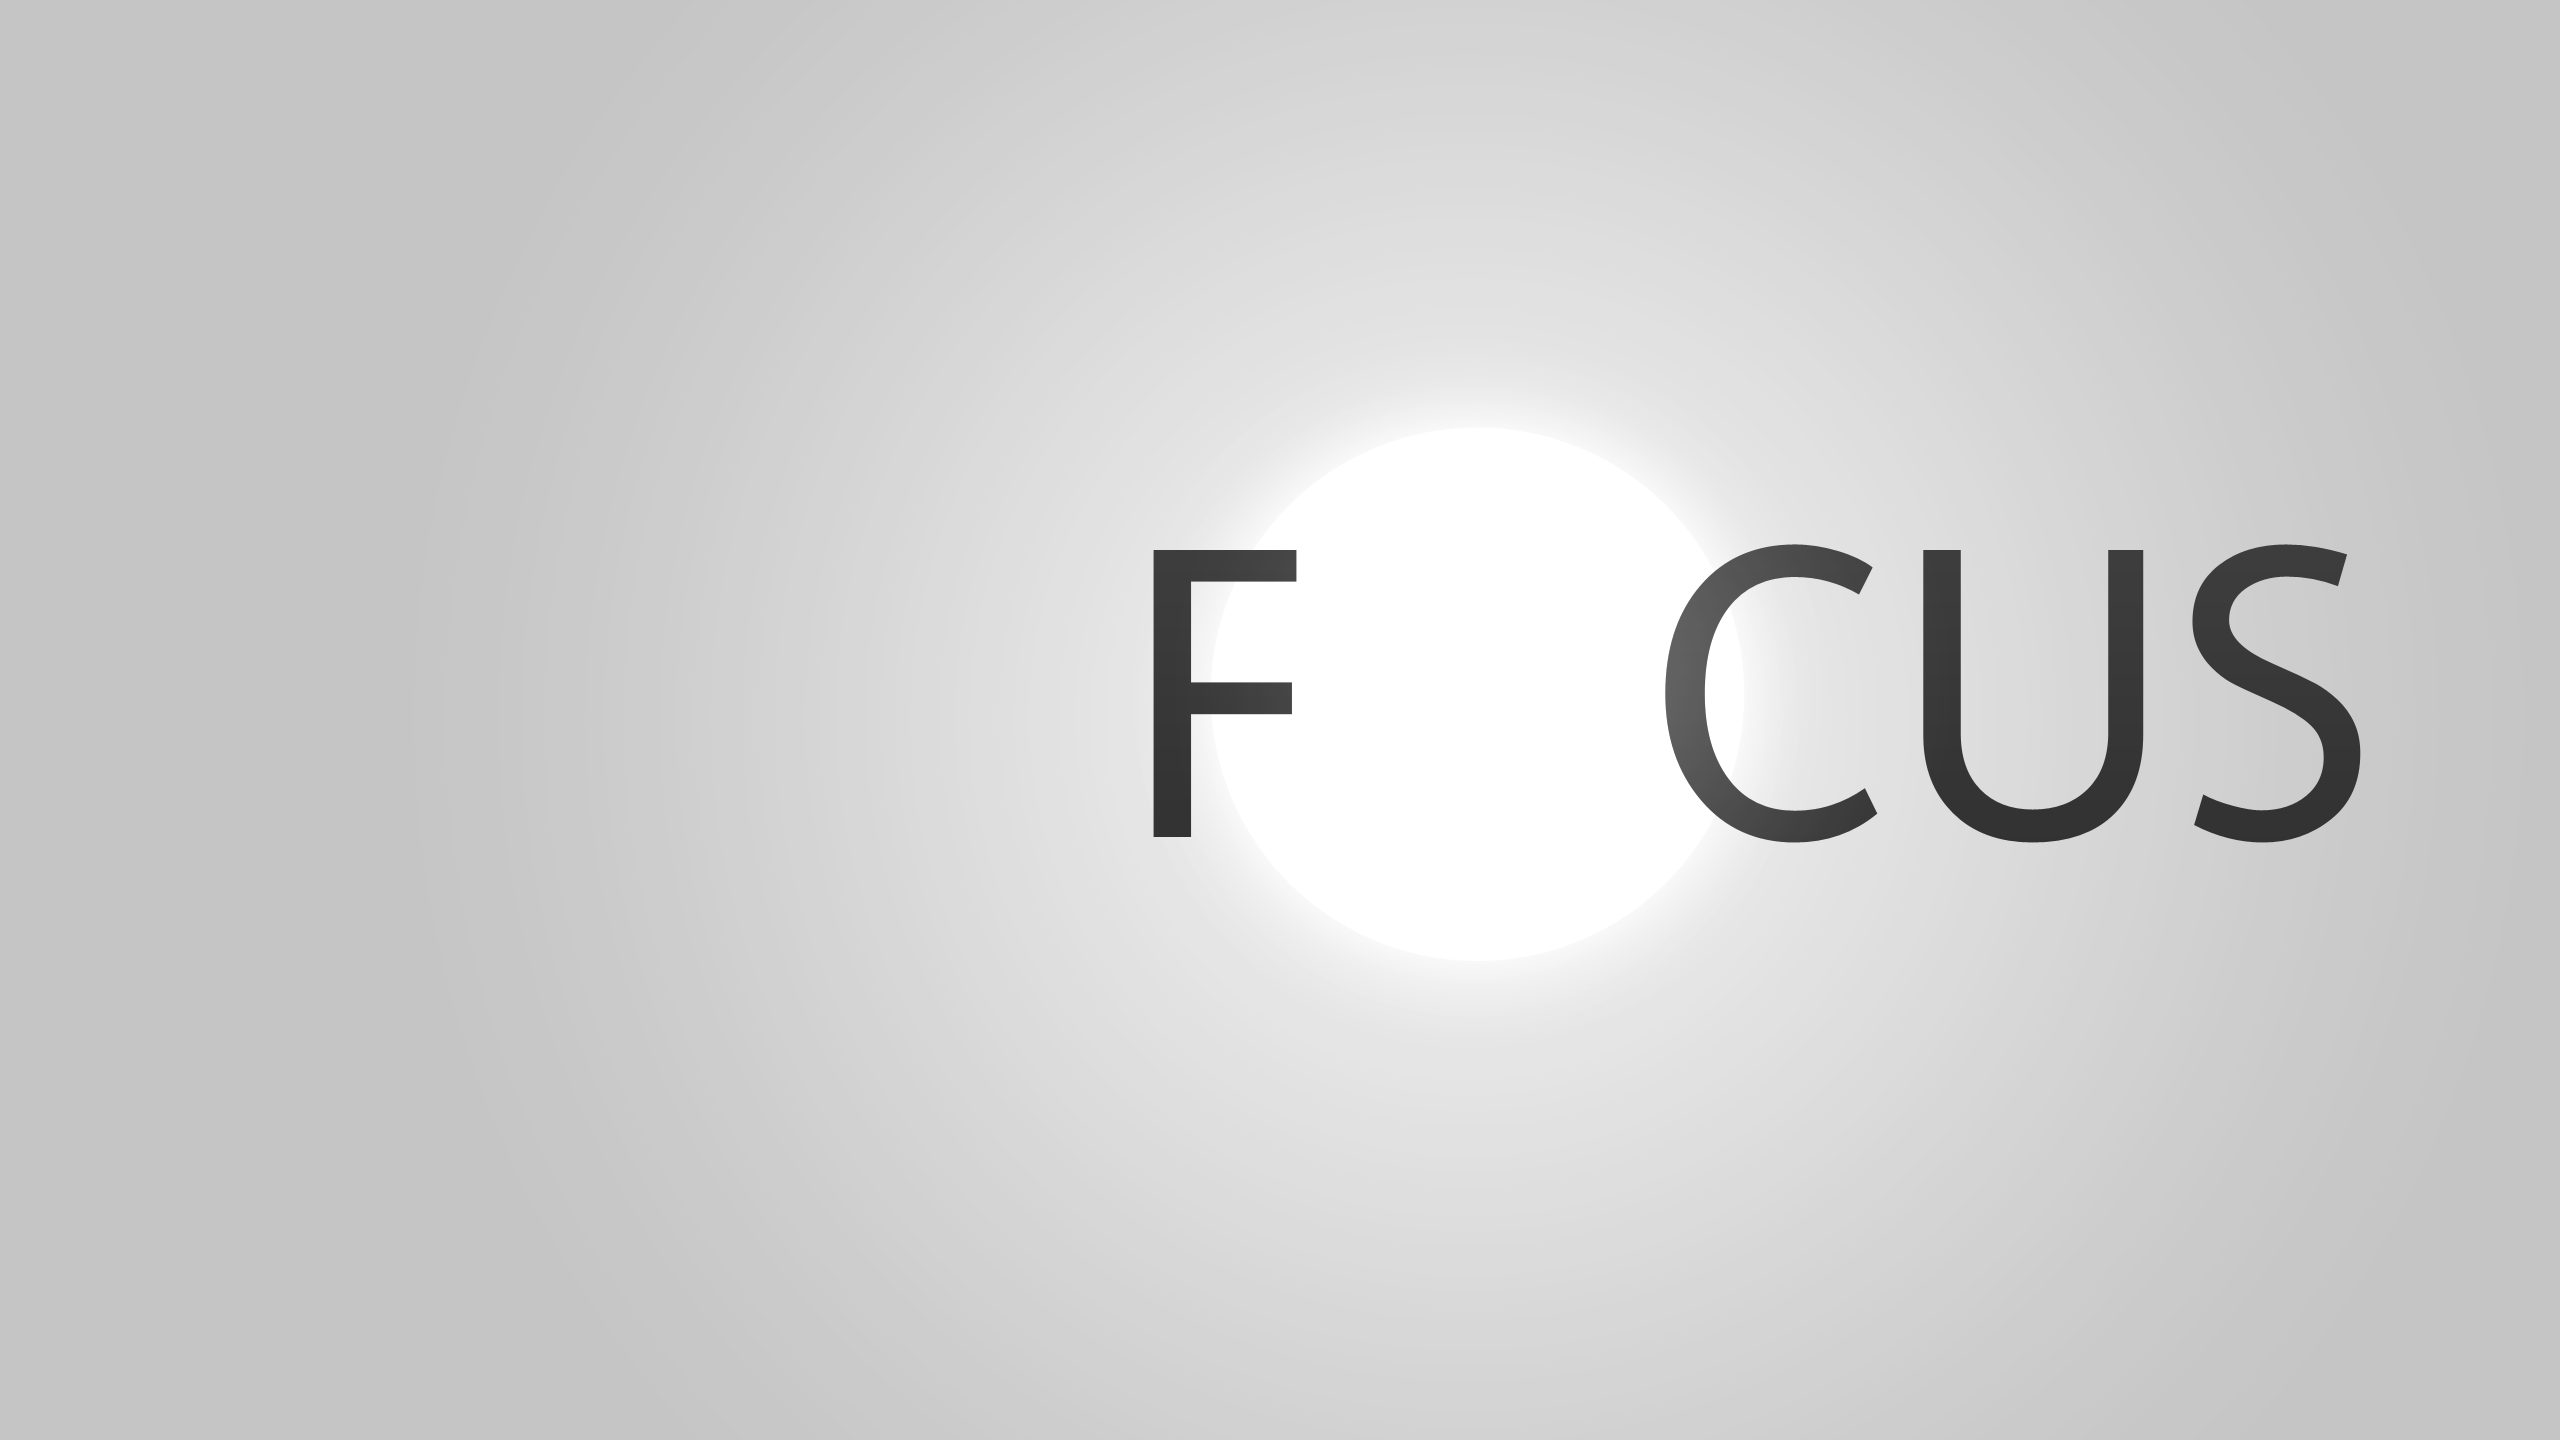 Focus Wallpapers - Top Free Focus Backgrounds - WallpaperAccess